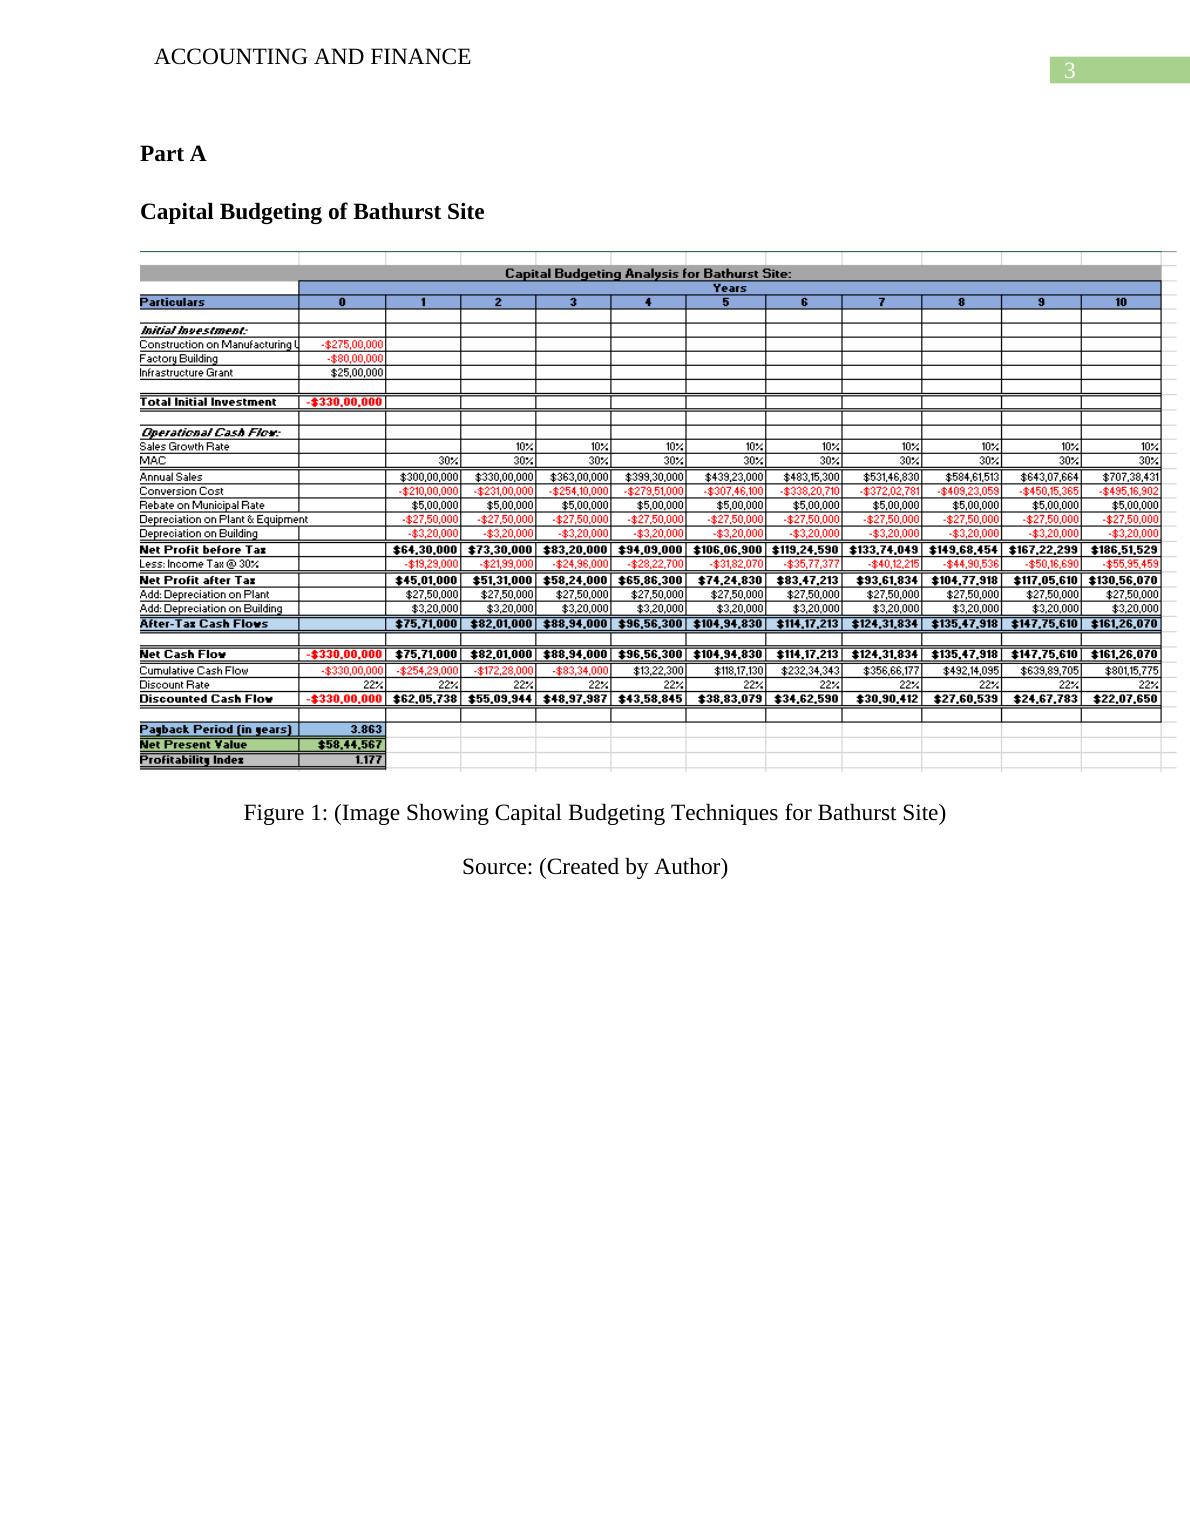 Capital Budgeting Techniques- PDF_4